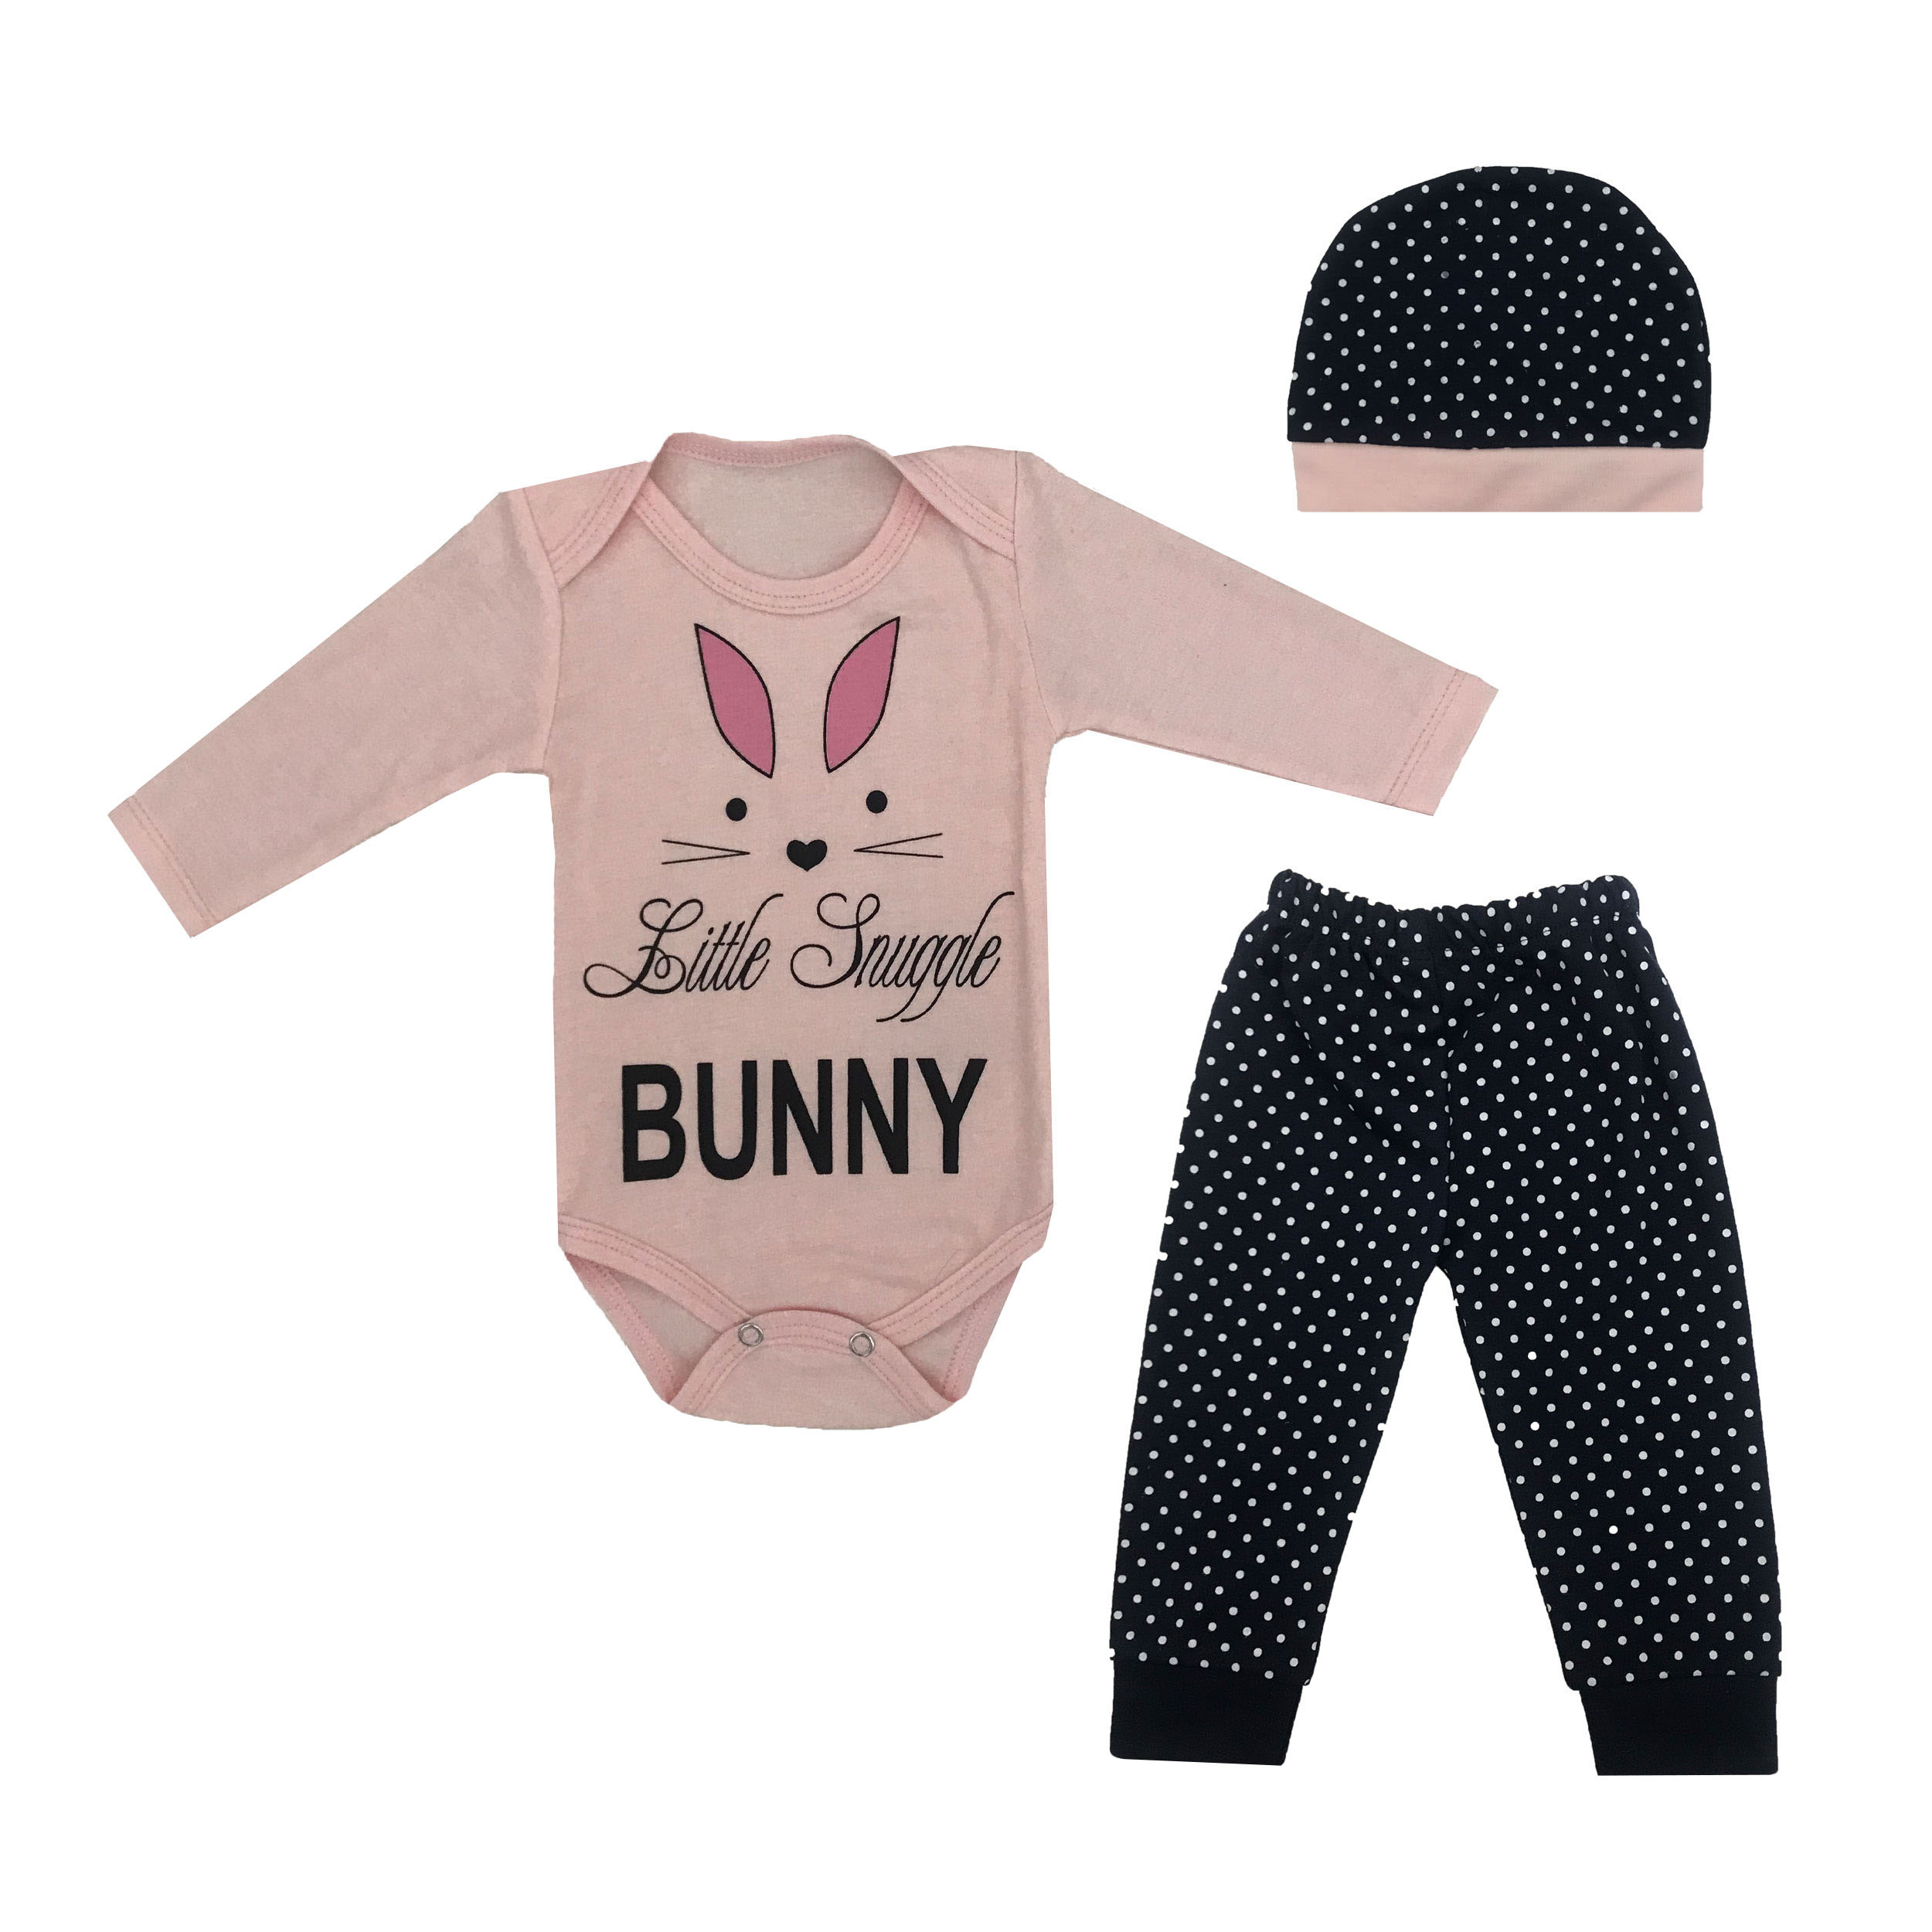 ست 3 تکه لباس نوزادی طرح خرگوش کد 101 -  - 1